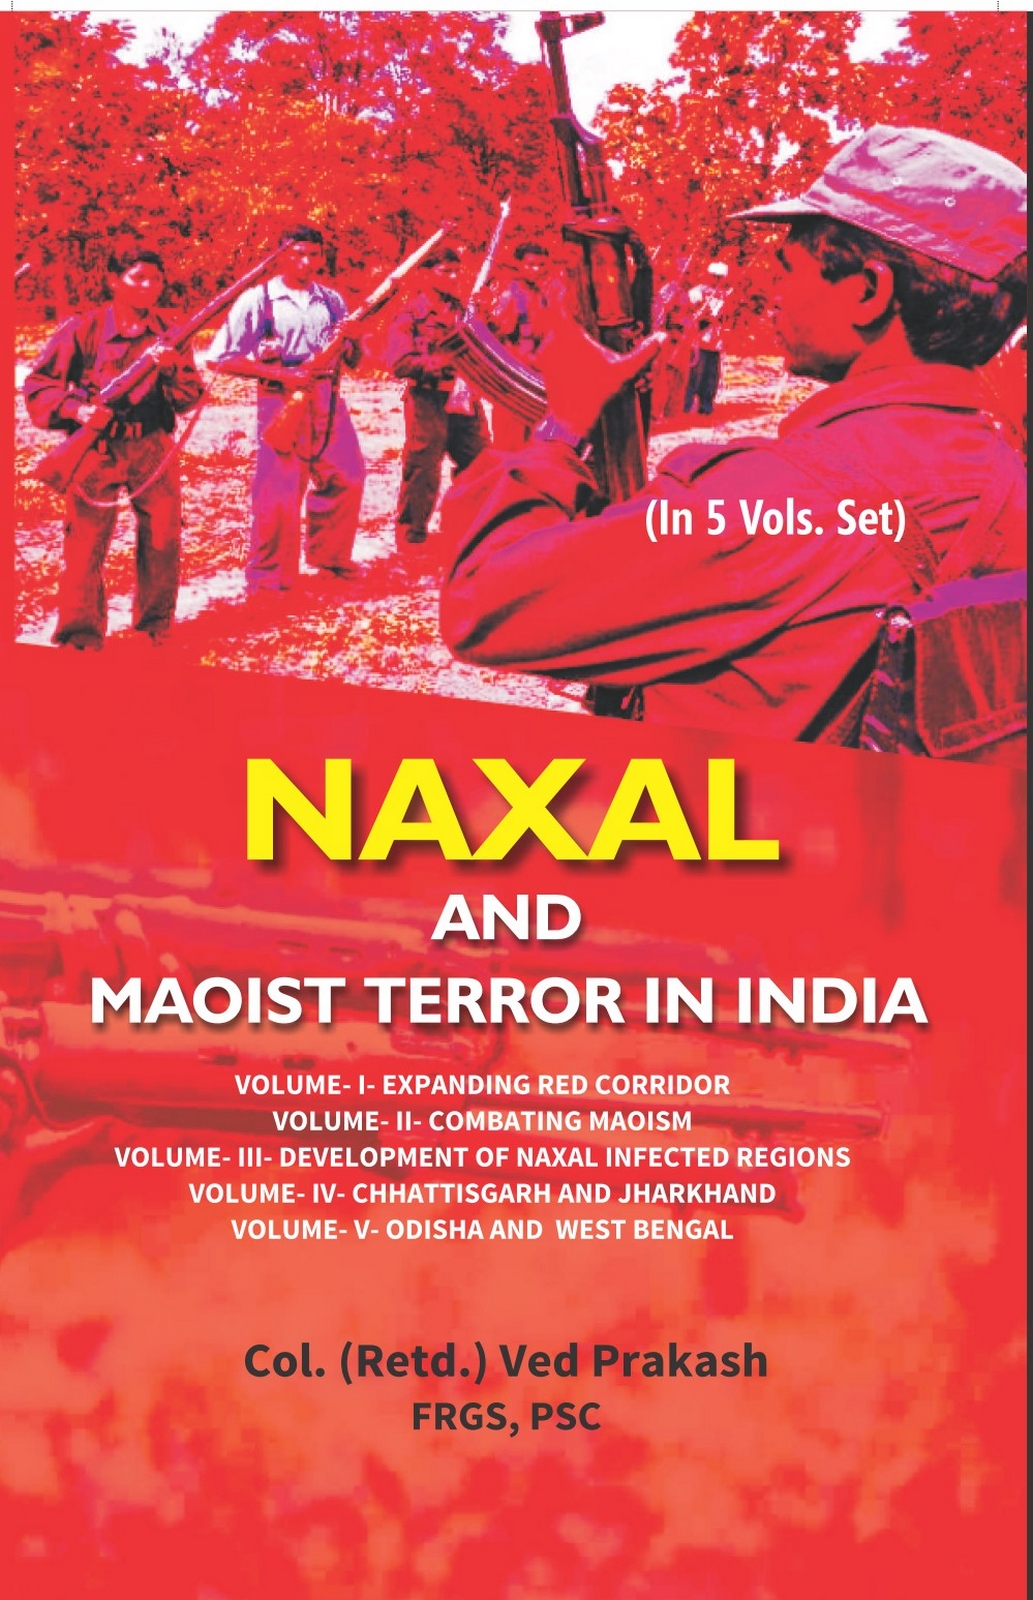 Naxal and Maoist Terror in India Volume-I (Expanding Red Corridor)